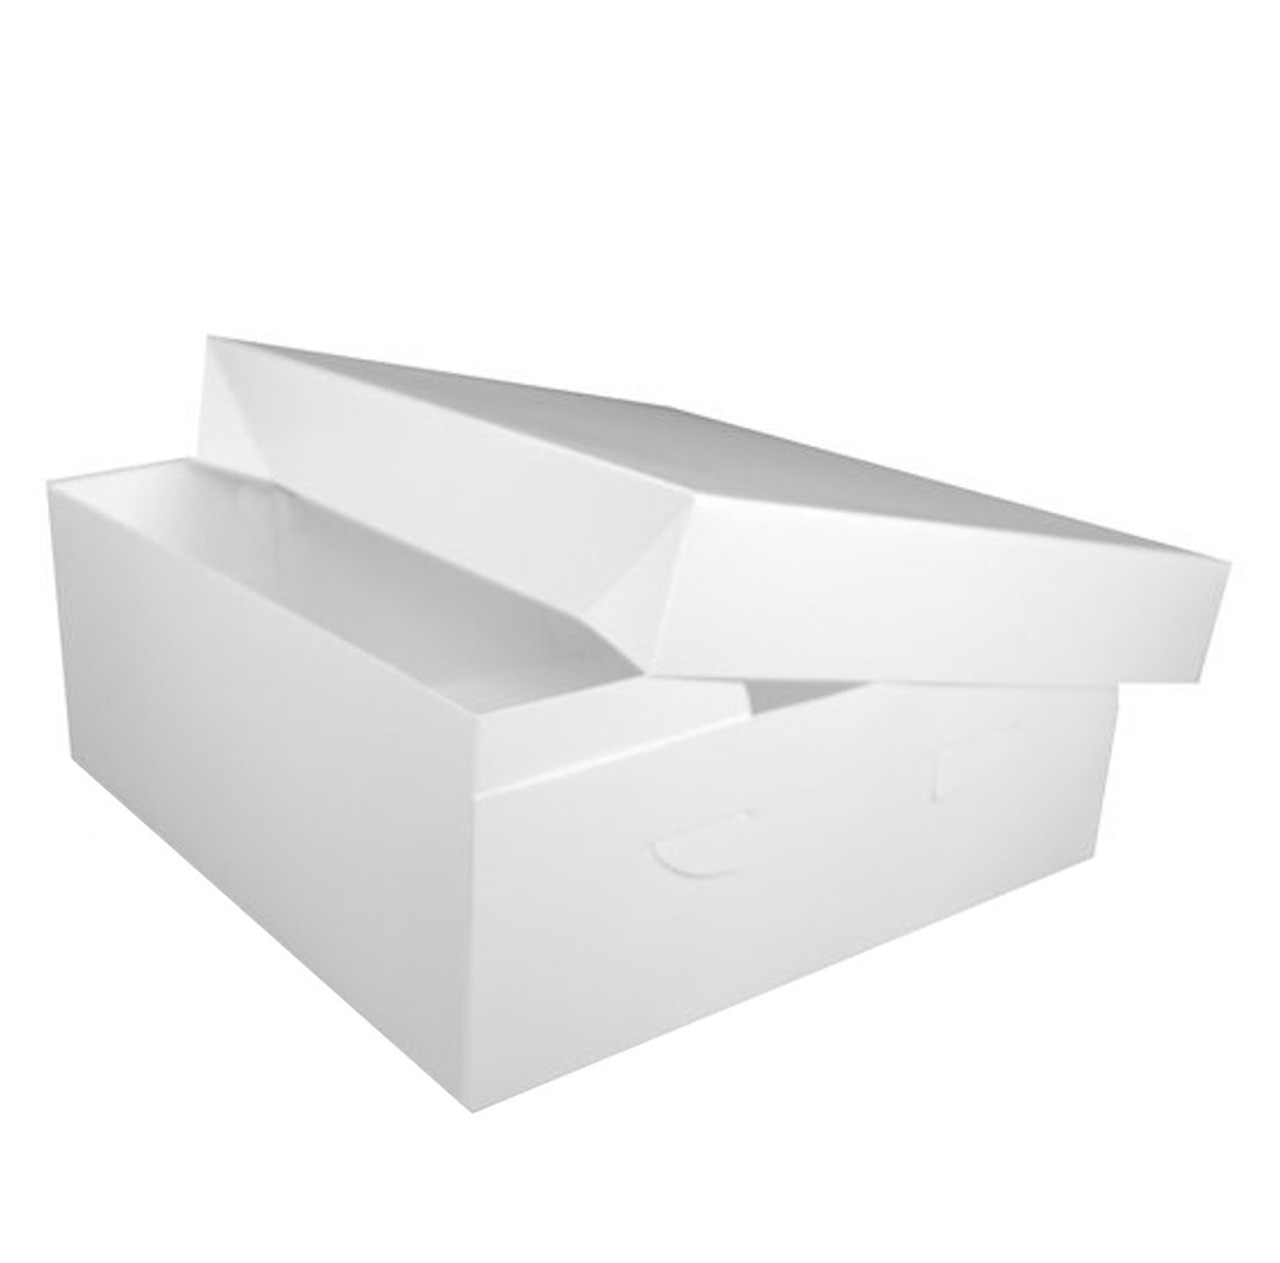   2 Piece quality white Cake  Box 8”x 8” x 5”  200 x 200 x 125mm ( Pack x 5 or 25 )